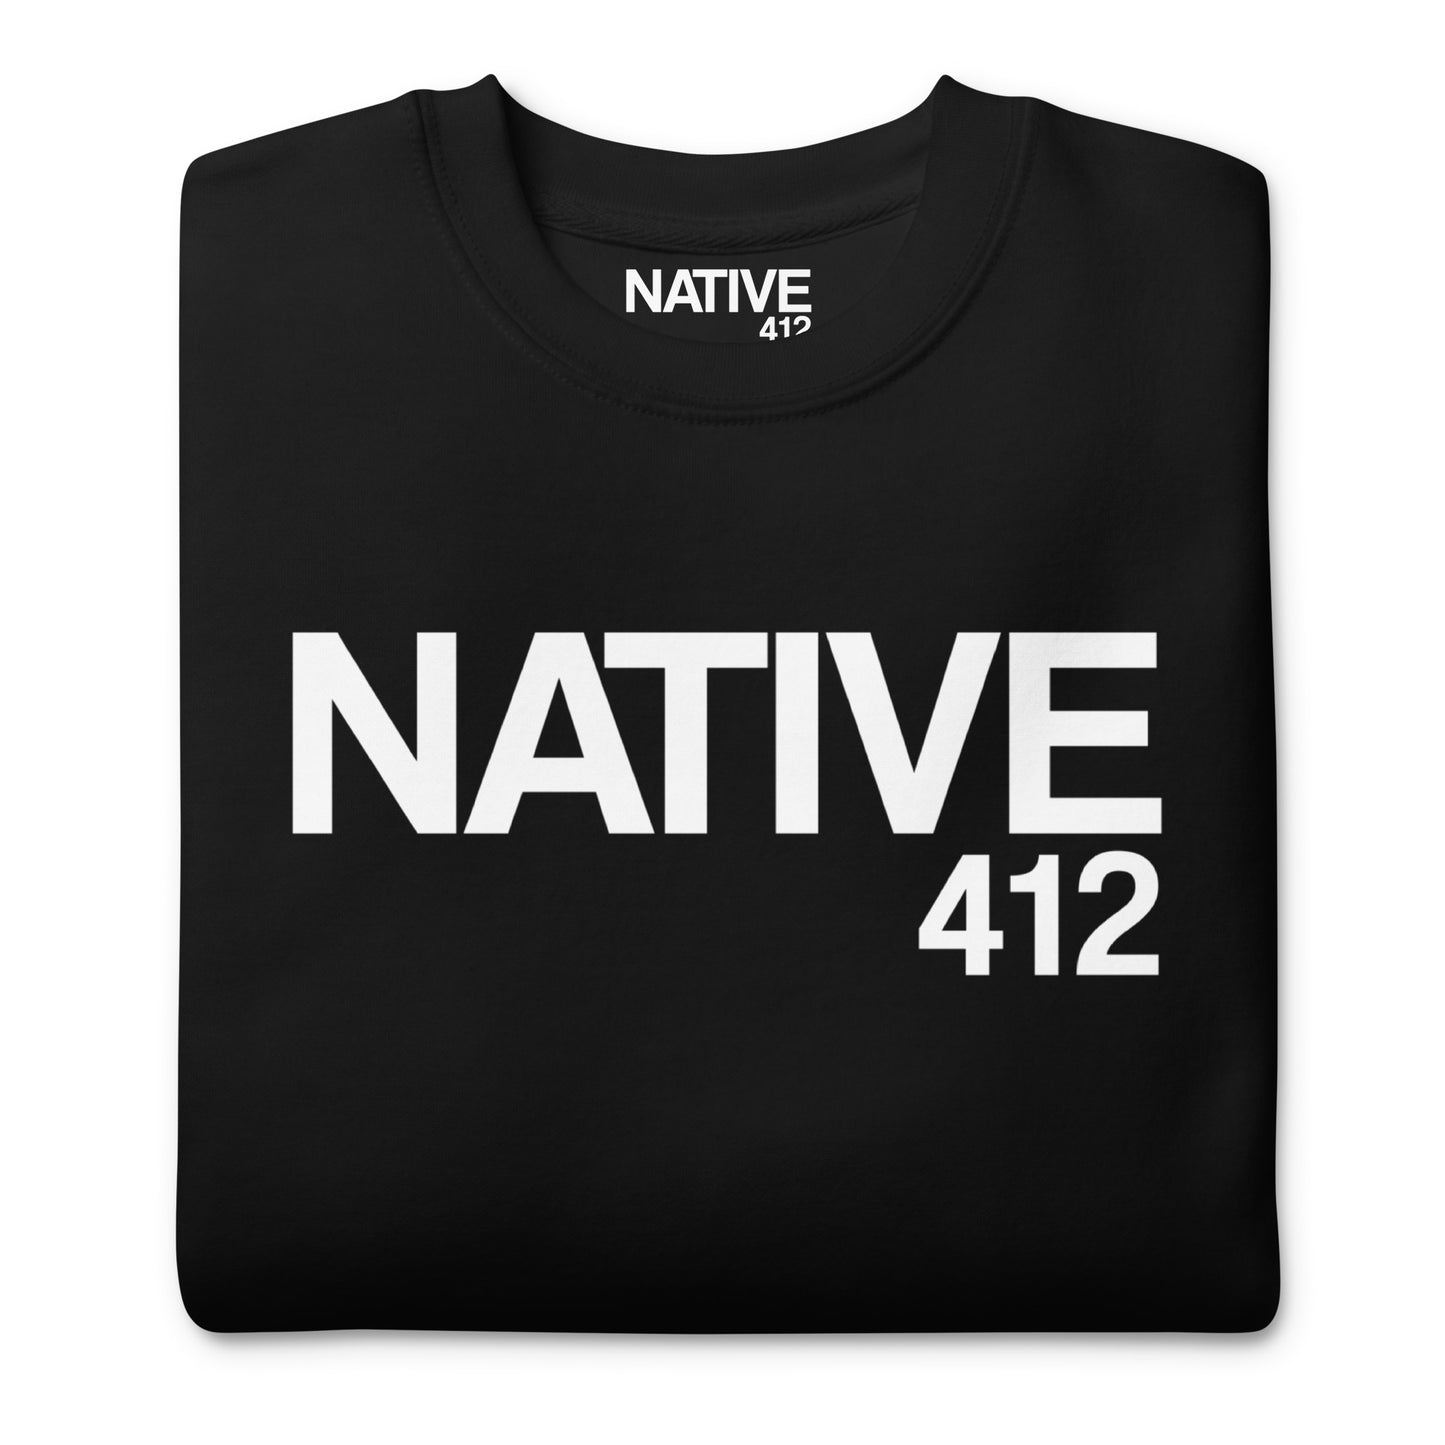 Native 412 Classic White on Black Unisex Premium Sweatshirt